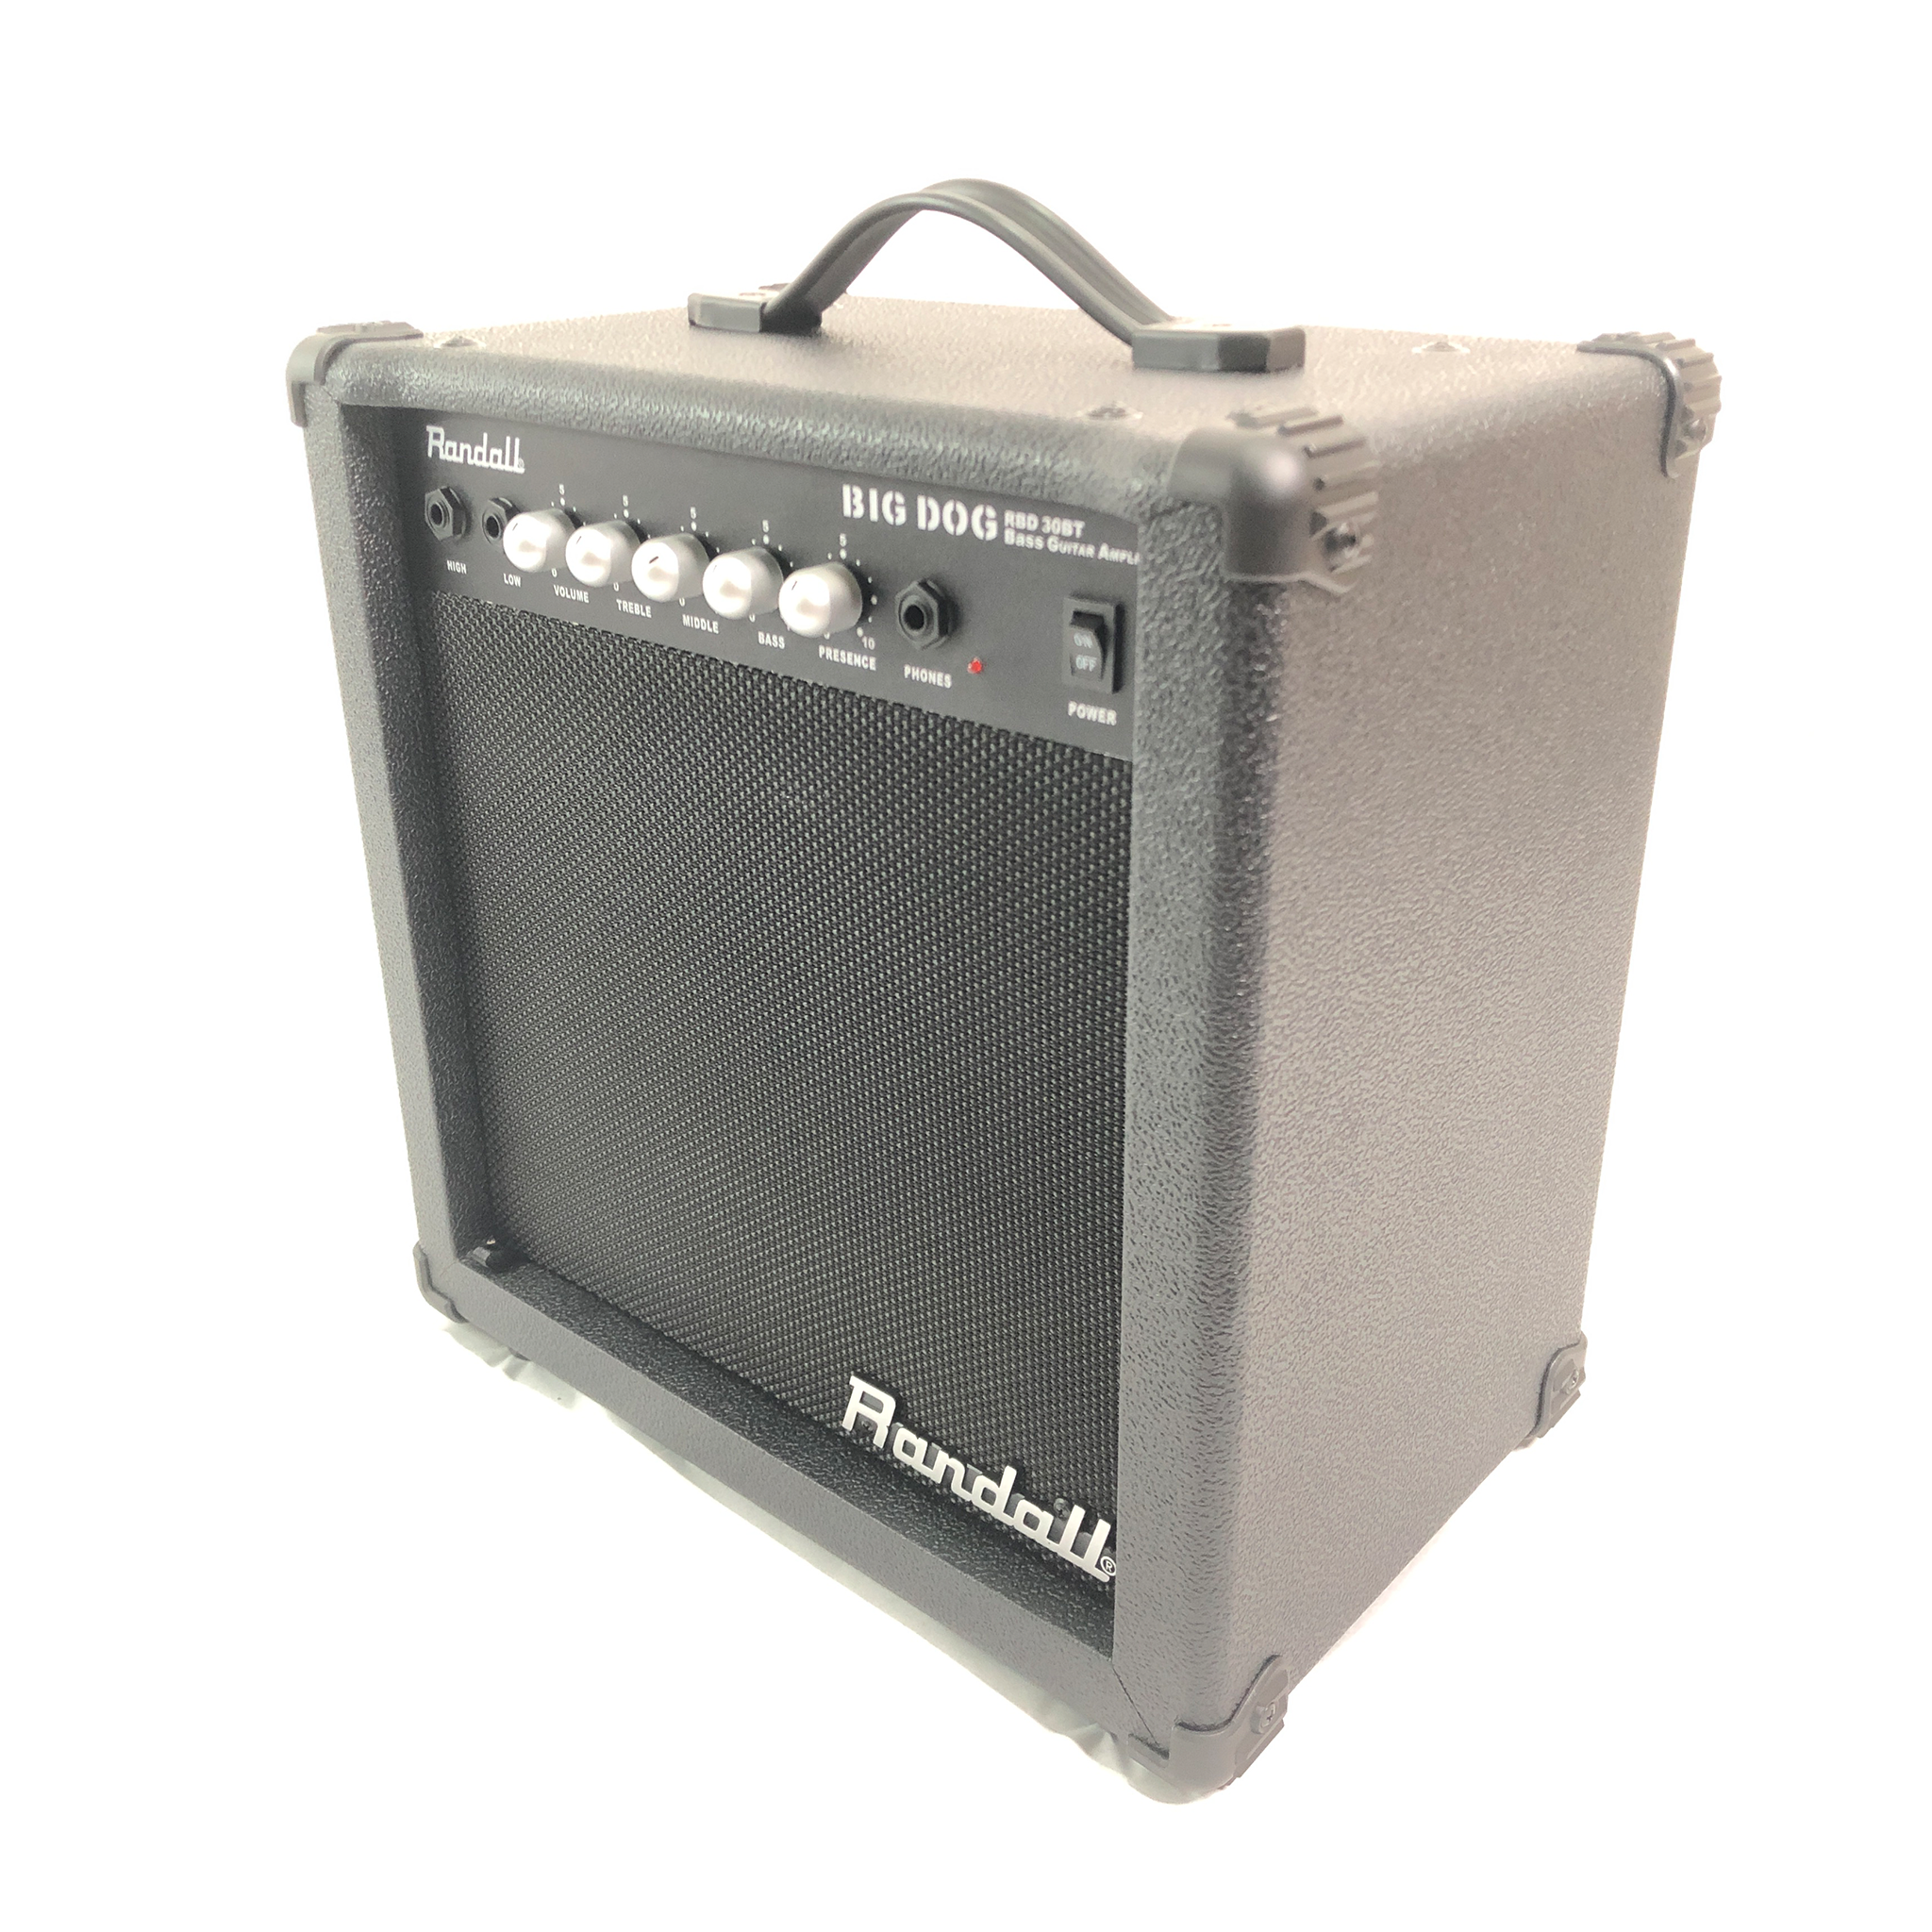 Randall USM-RBD30BTE Big Dog Bass Amplifier 30W